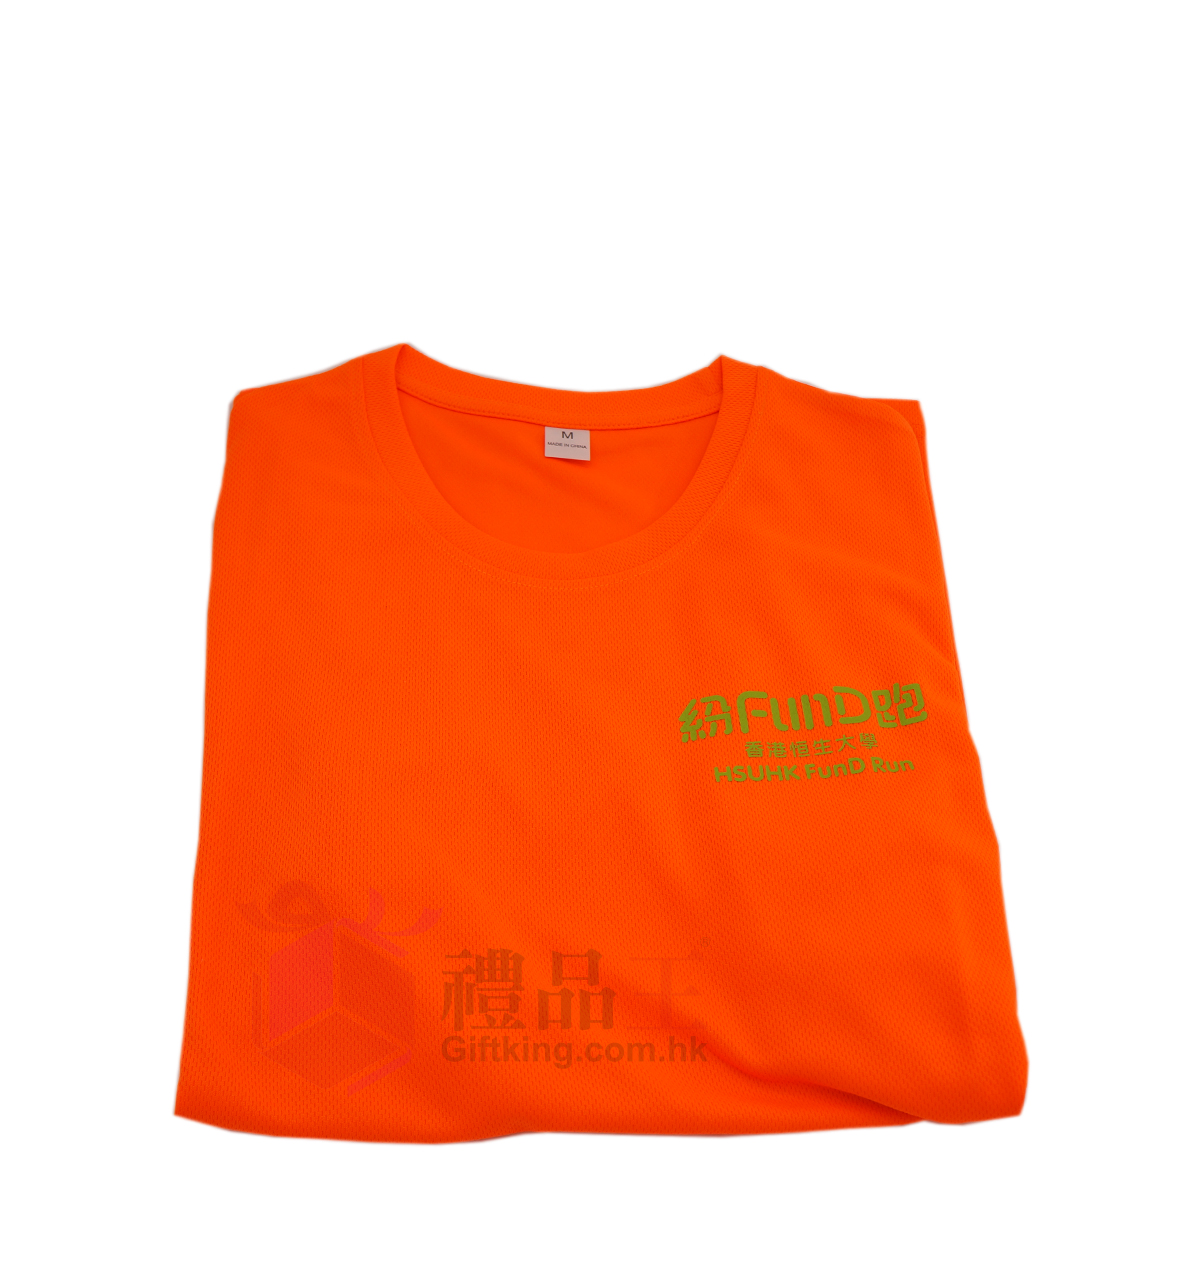 HSUHK FunD Run T-shirt (Souvenir Gift)